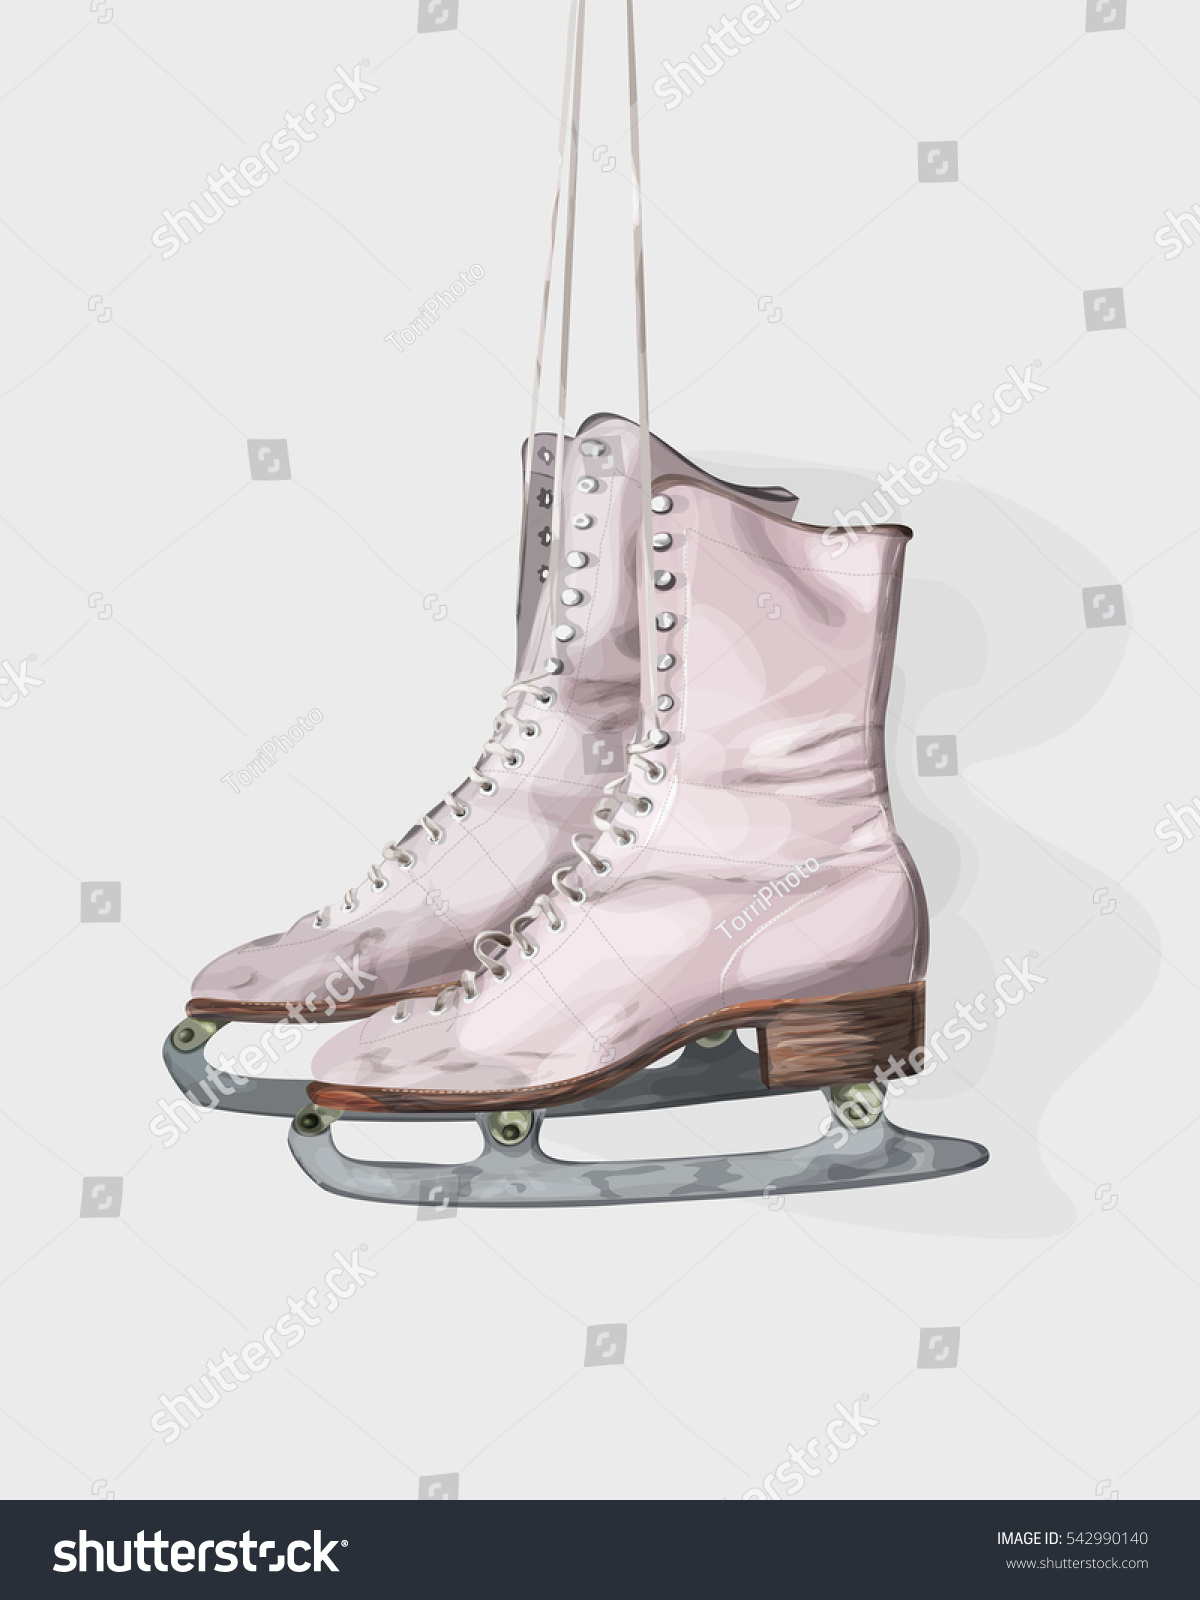 https://www.shutterstock.com/image-illustration/pair-pink-vintage-ice-skates-hanging-542990140